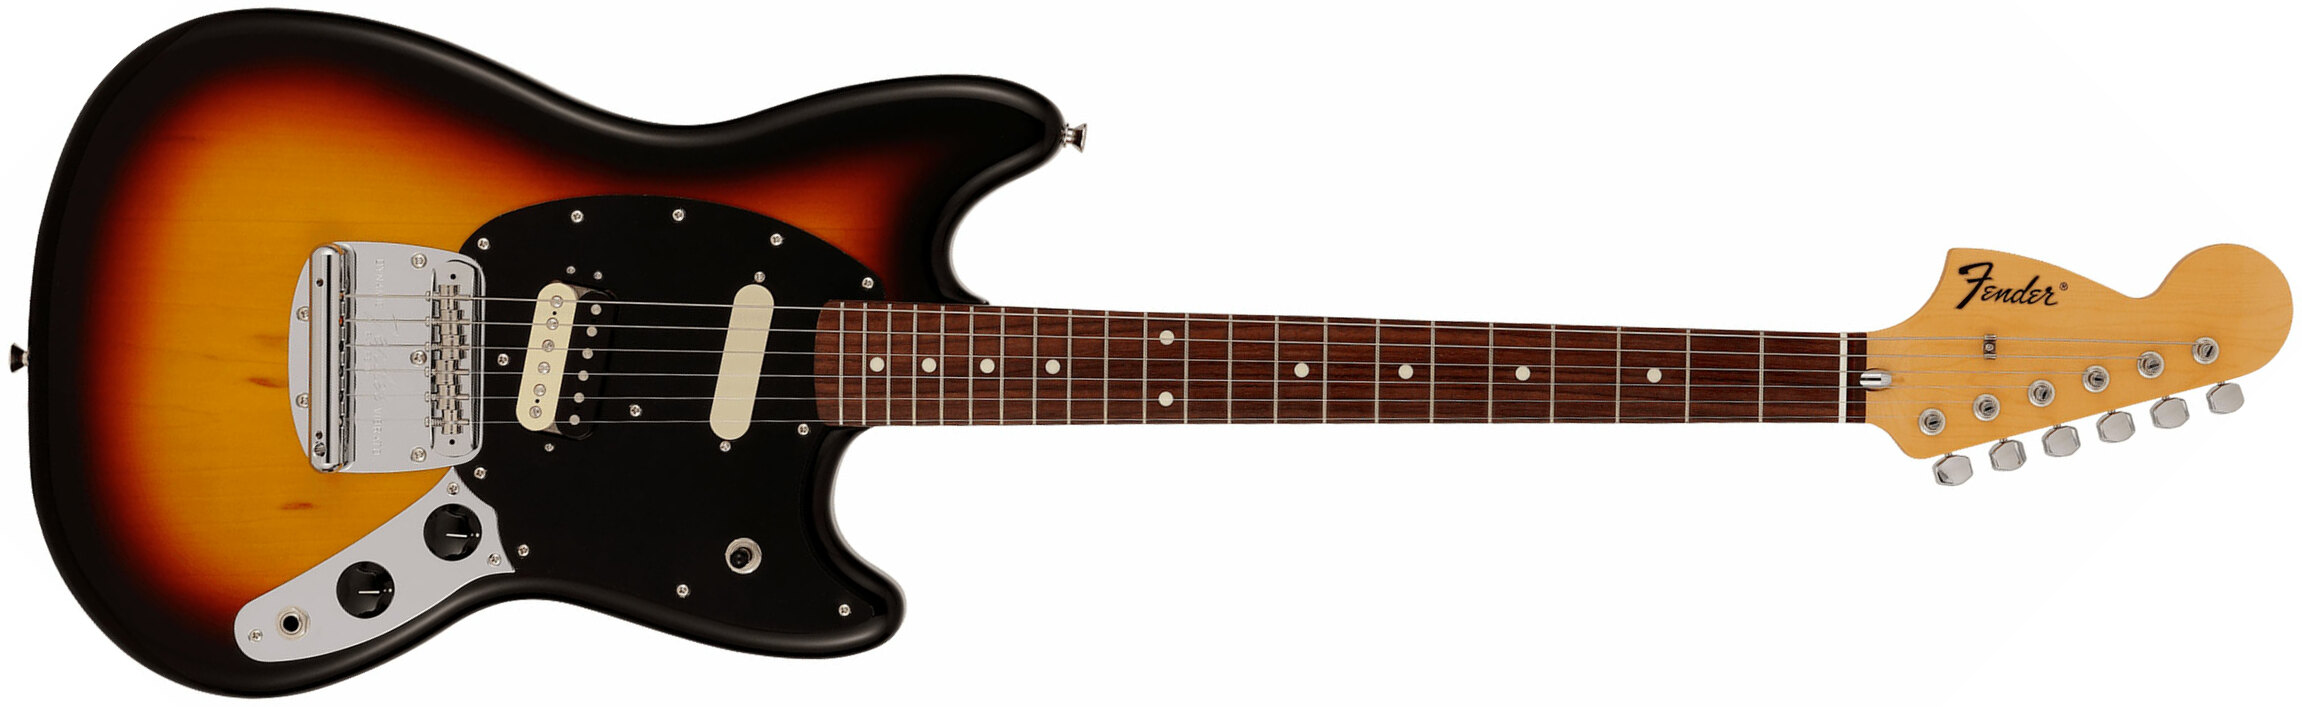 Fender Mustang Reverse Headstock Traditional Ltd Jap Hs Trem Rw - 3-color Sunburst - E-Gitarre in Str-Form - Main picture